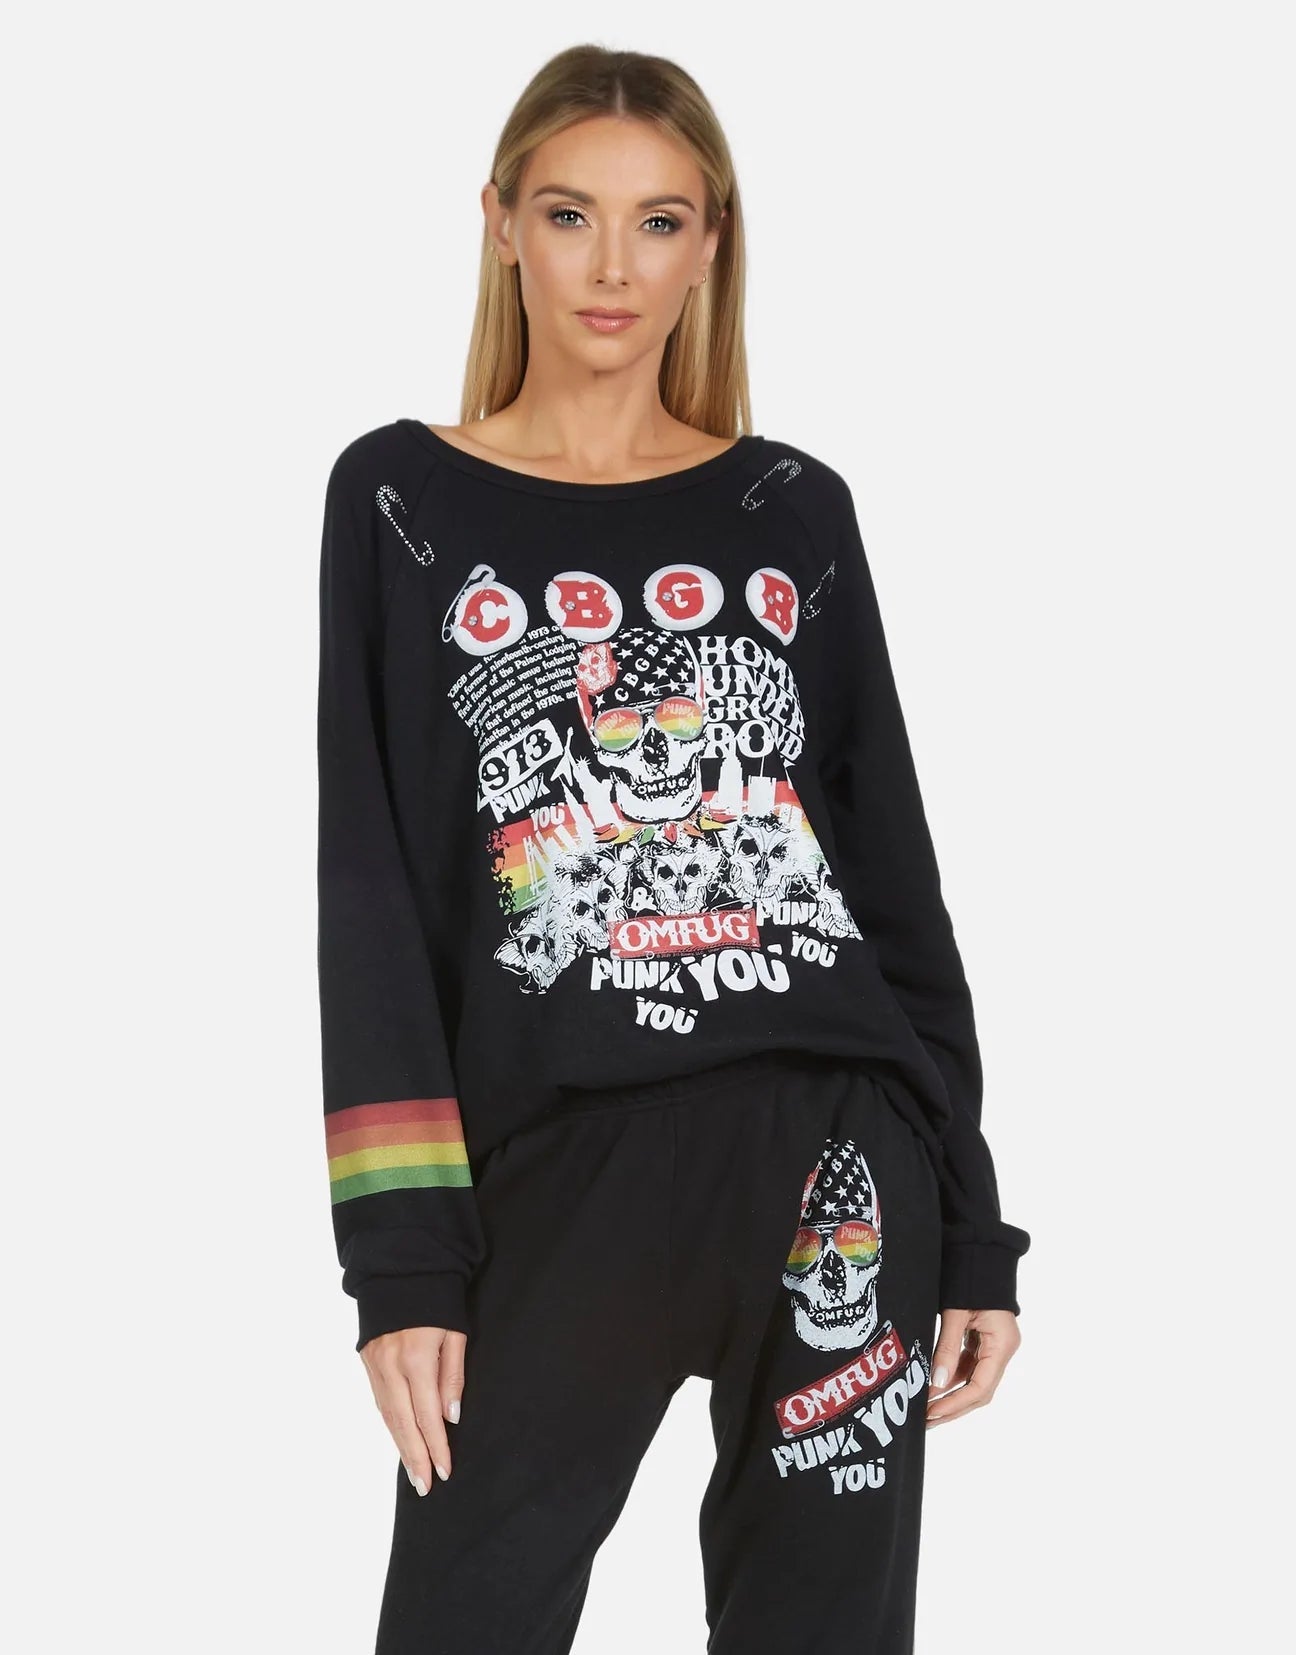 Shop Lauren Moshi Noleta Punk CBGB Sweater - Premium Pullover from Lauren Moshi Online now at Spoiled Brat 